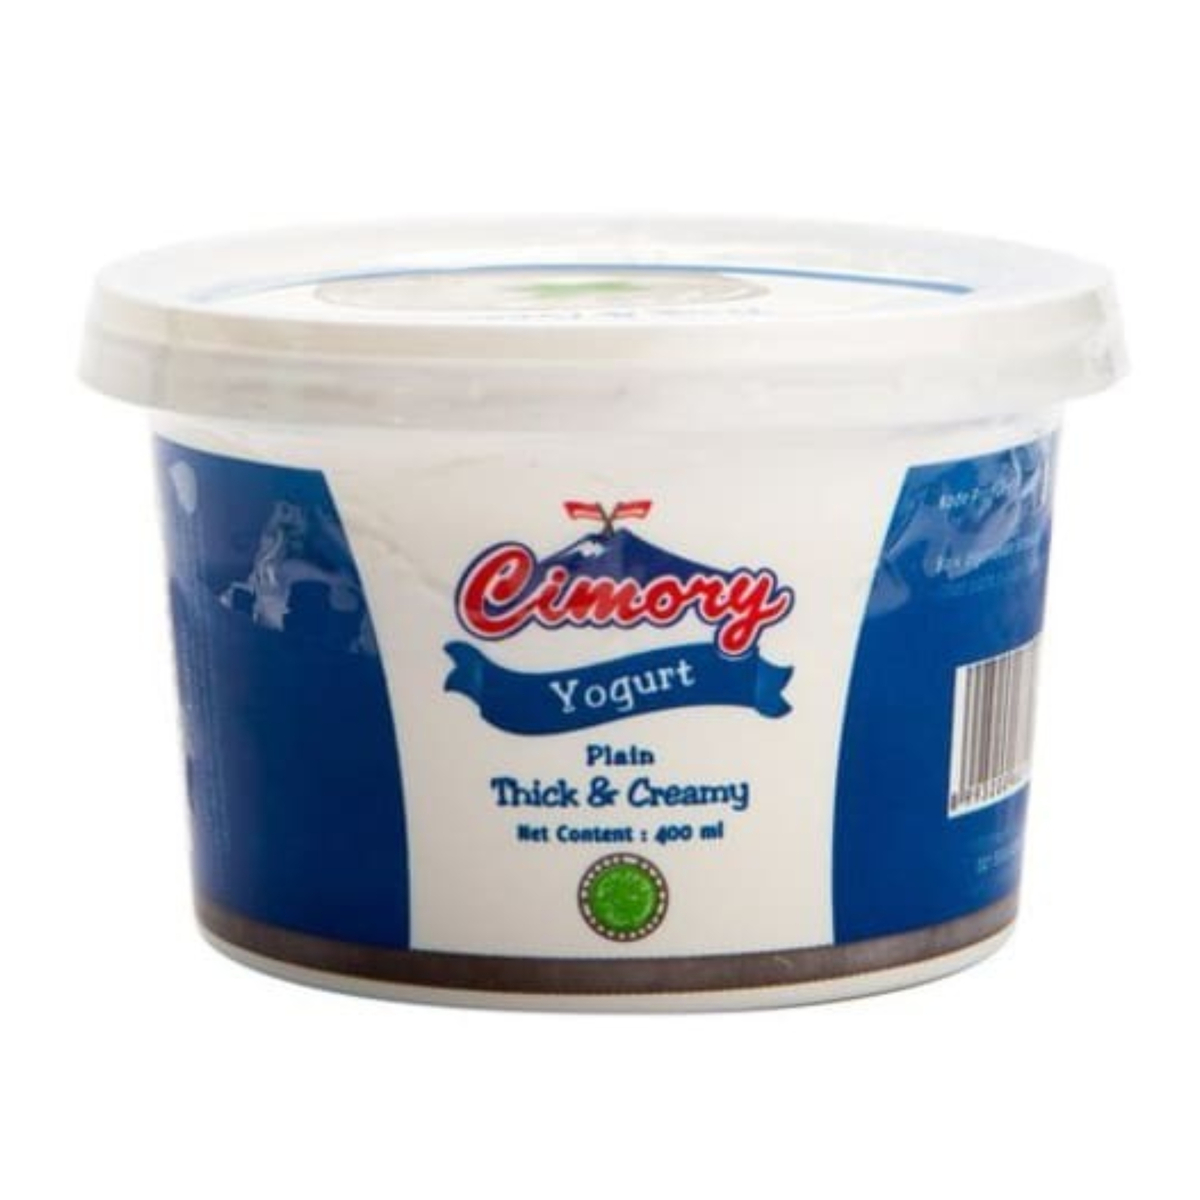 Cimory Yogurt Plain Thick & Creamy 400ml